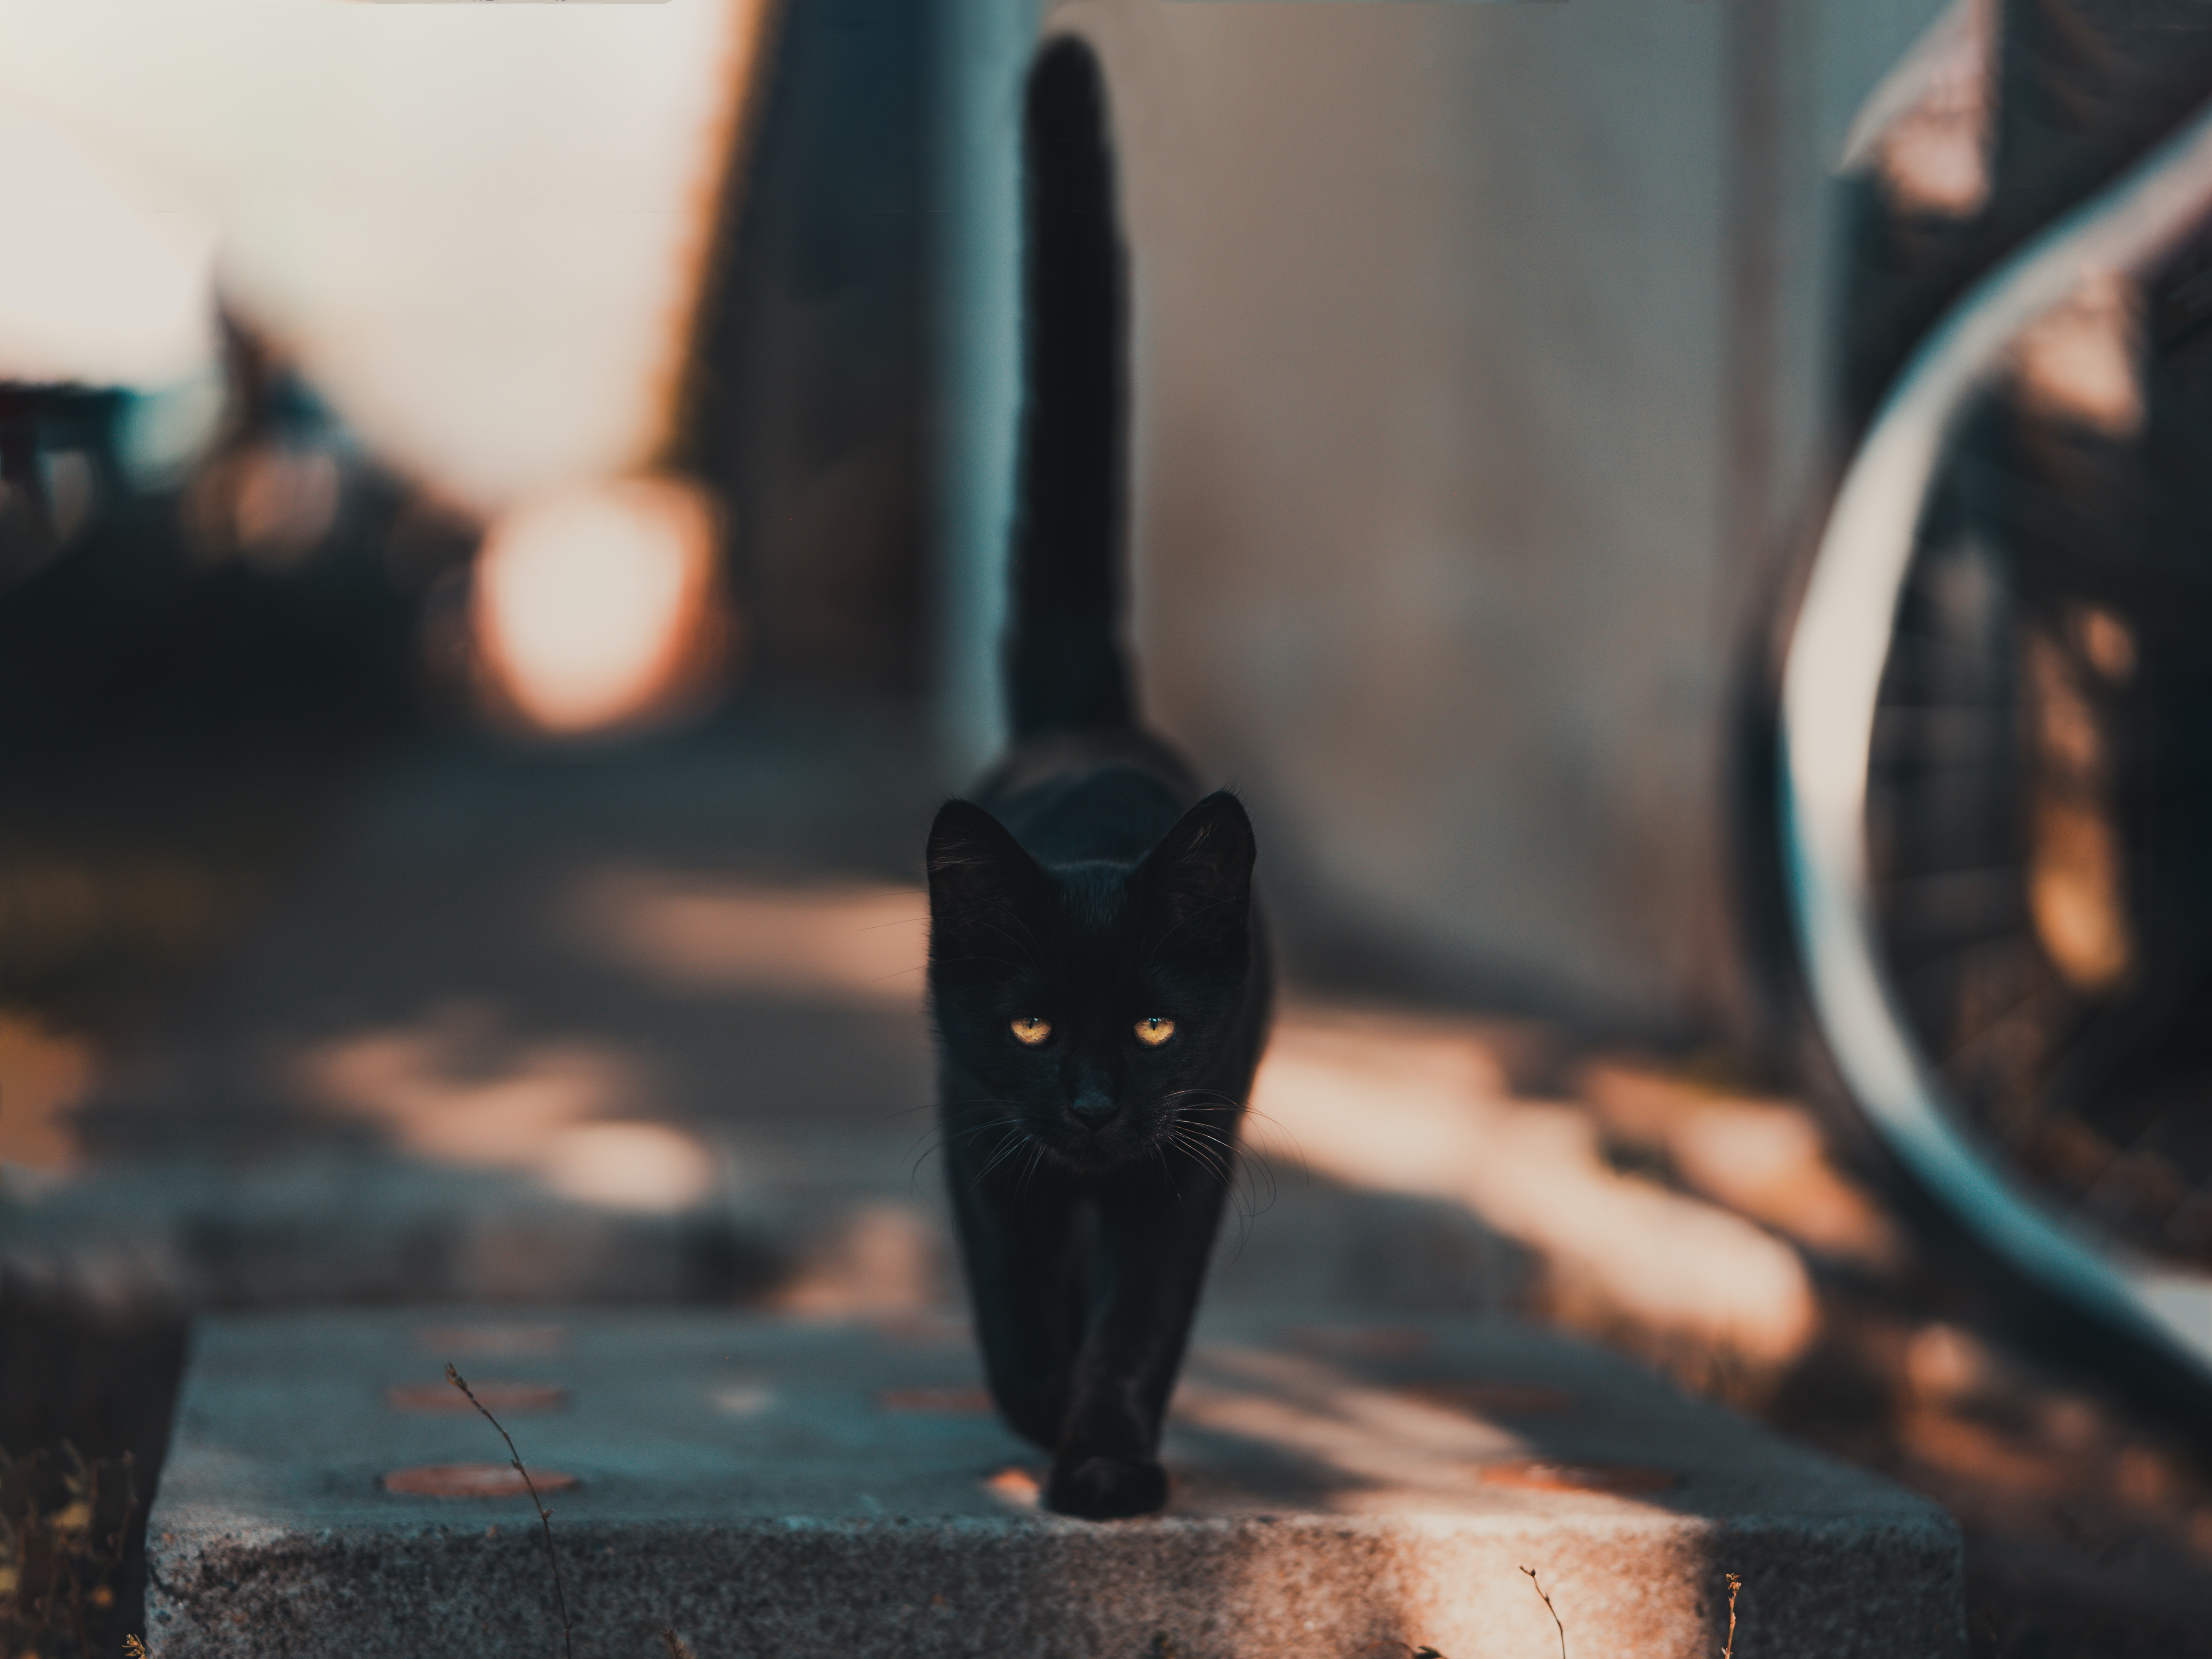 A black cat with yellow eyes walking on a sidewalk. - Cat